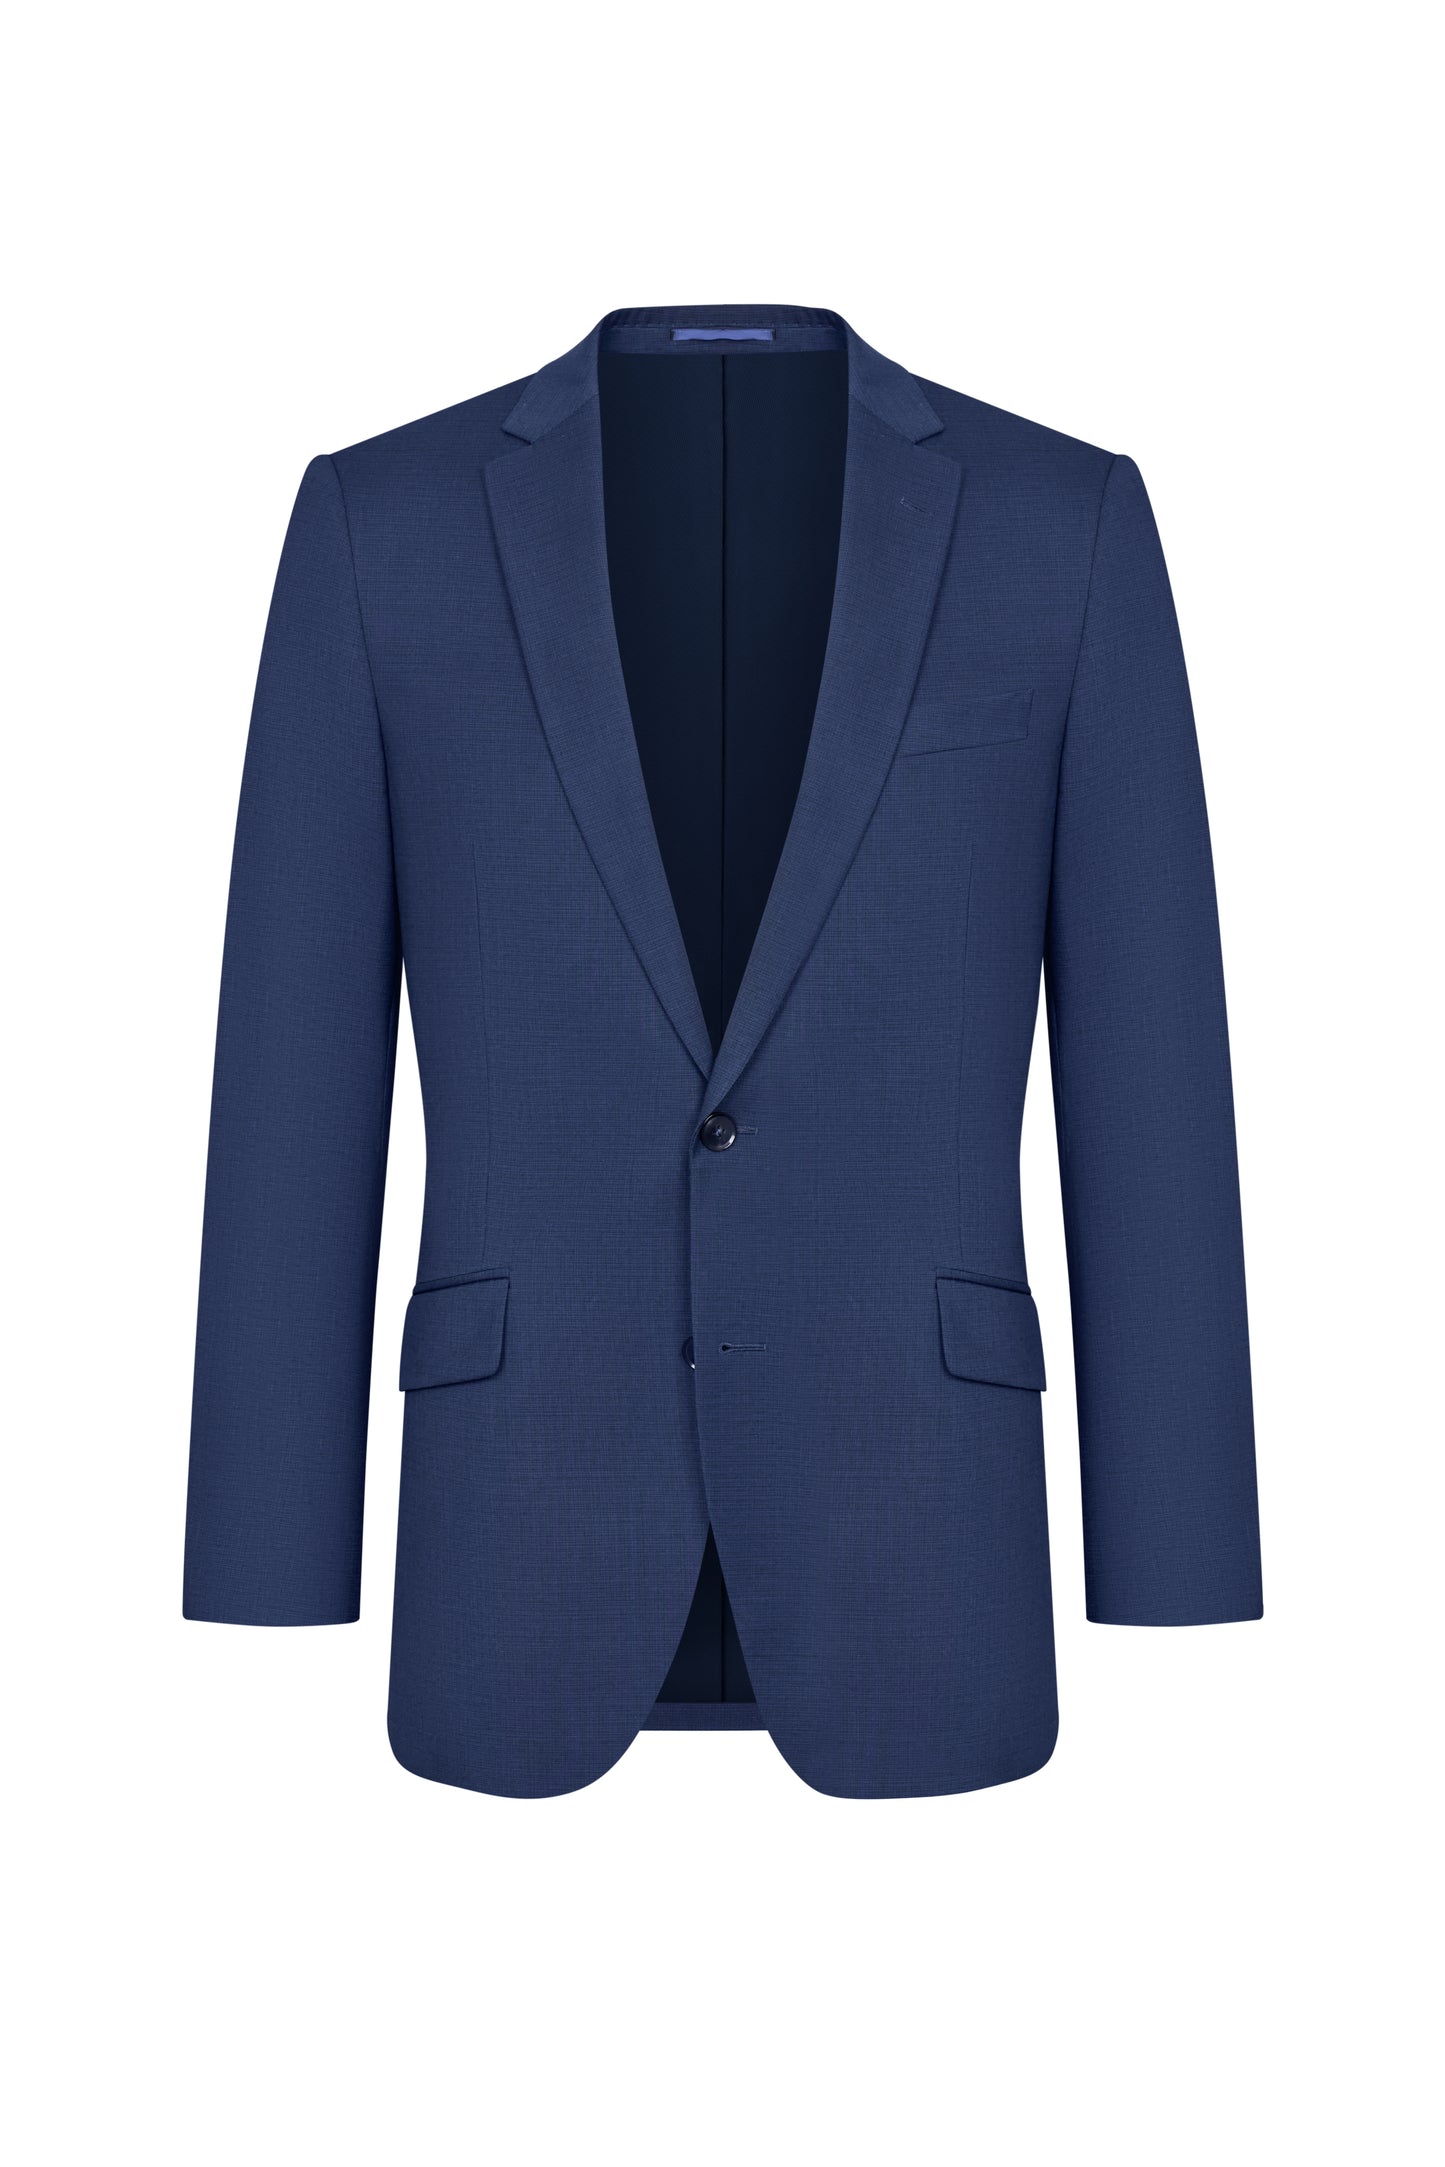 Dormeuil Royal Blue Sharkskin Custom Suit